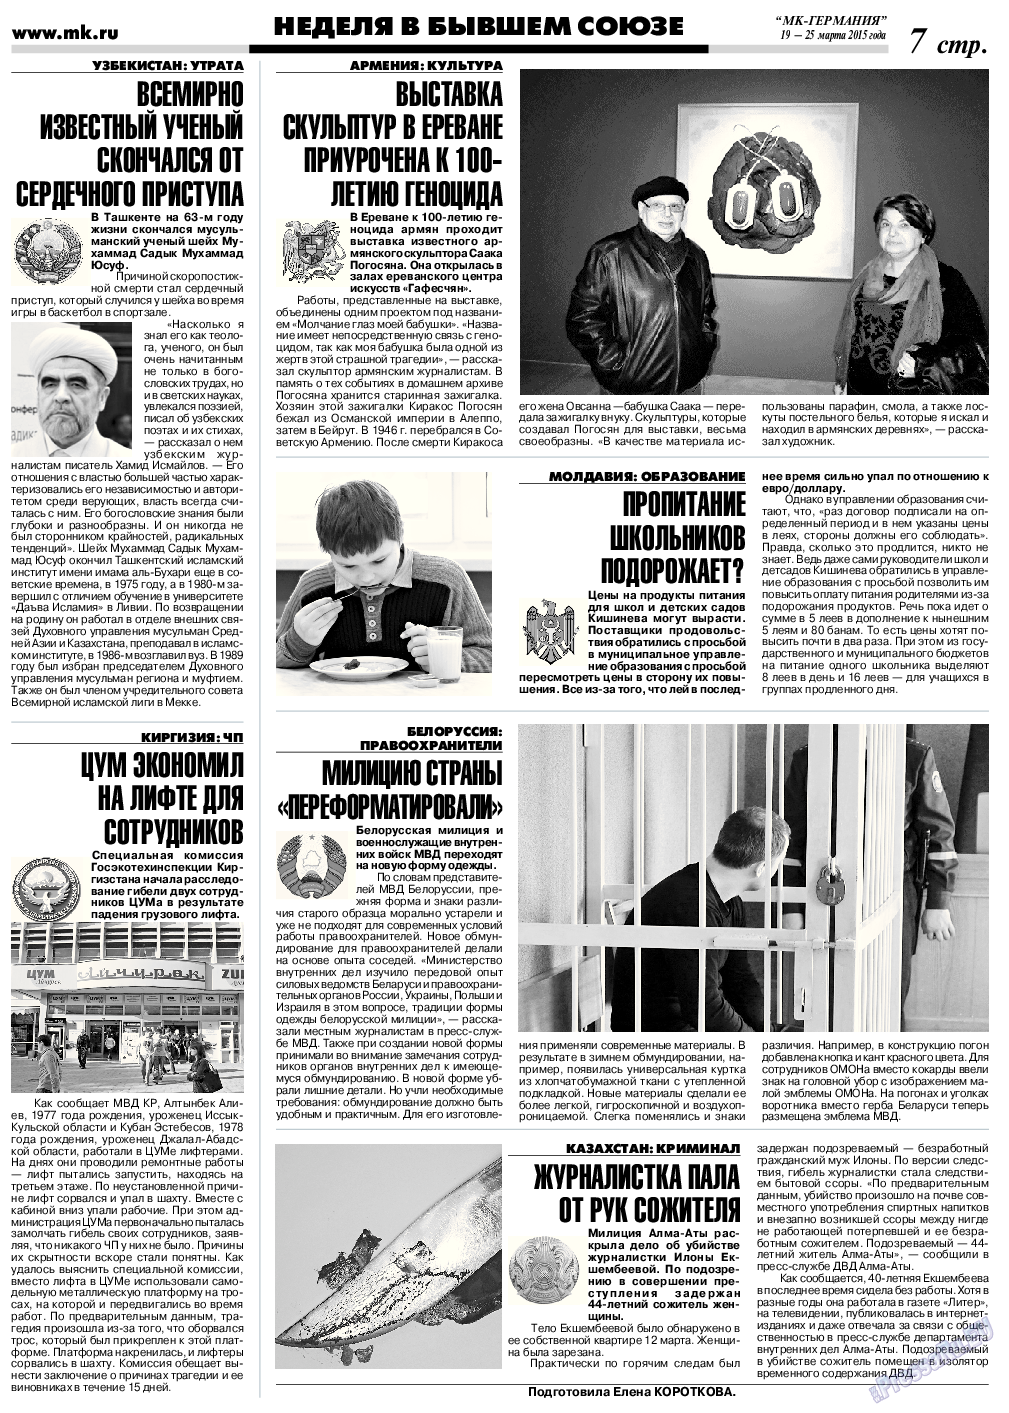 МК-Германия, газета. 2015 №12 стр.7